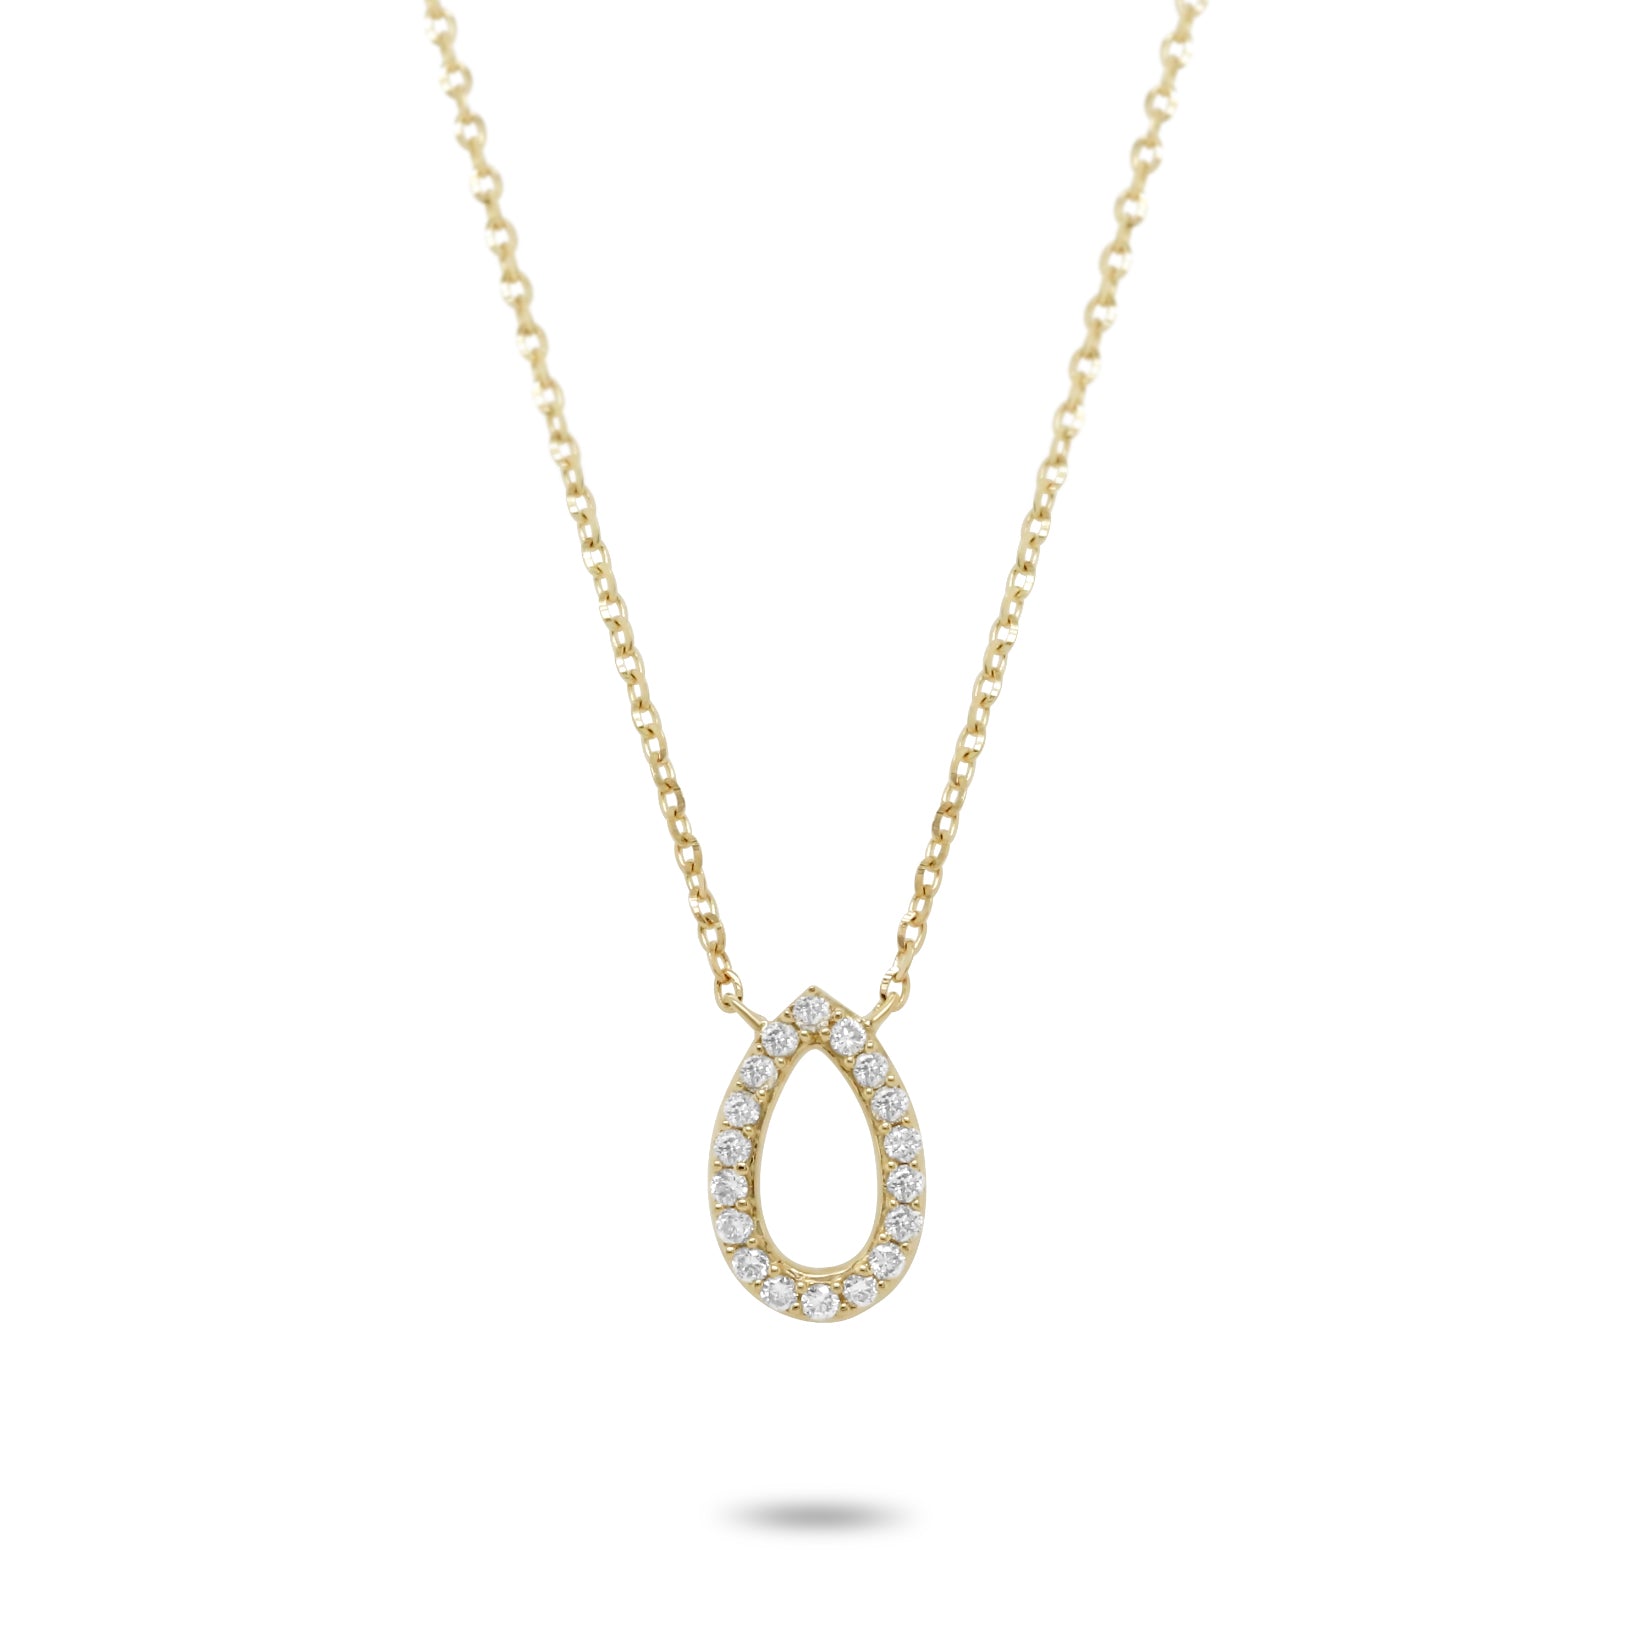 14k yellow gold diamond pave tear drop pendant necklace